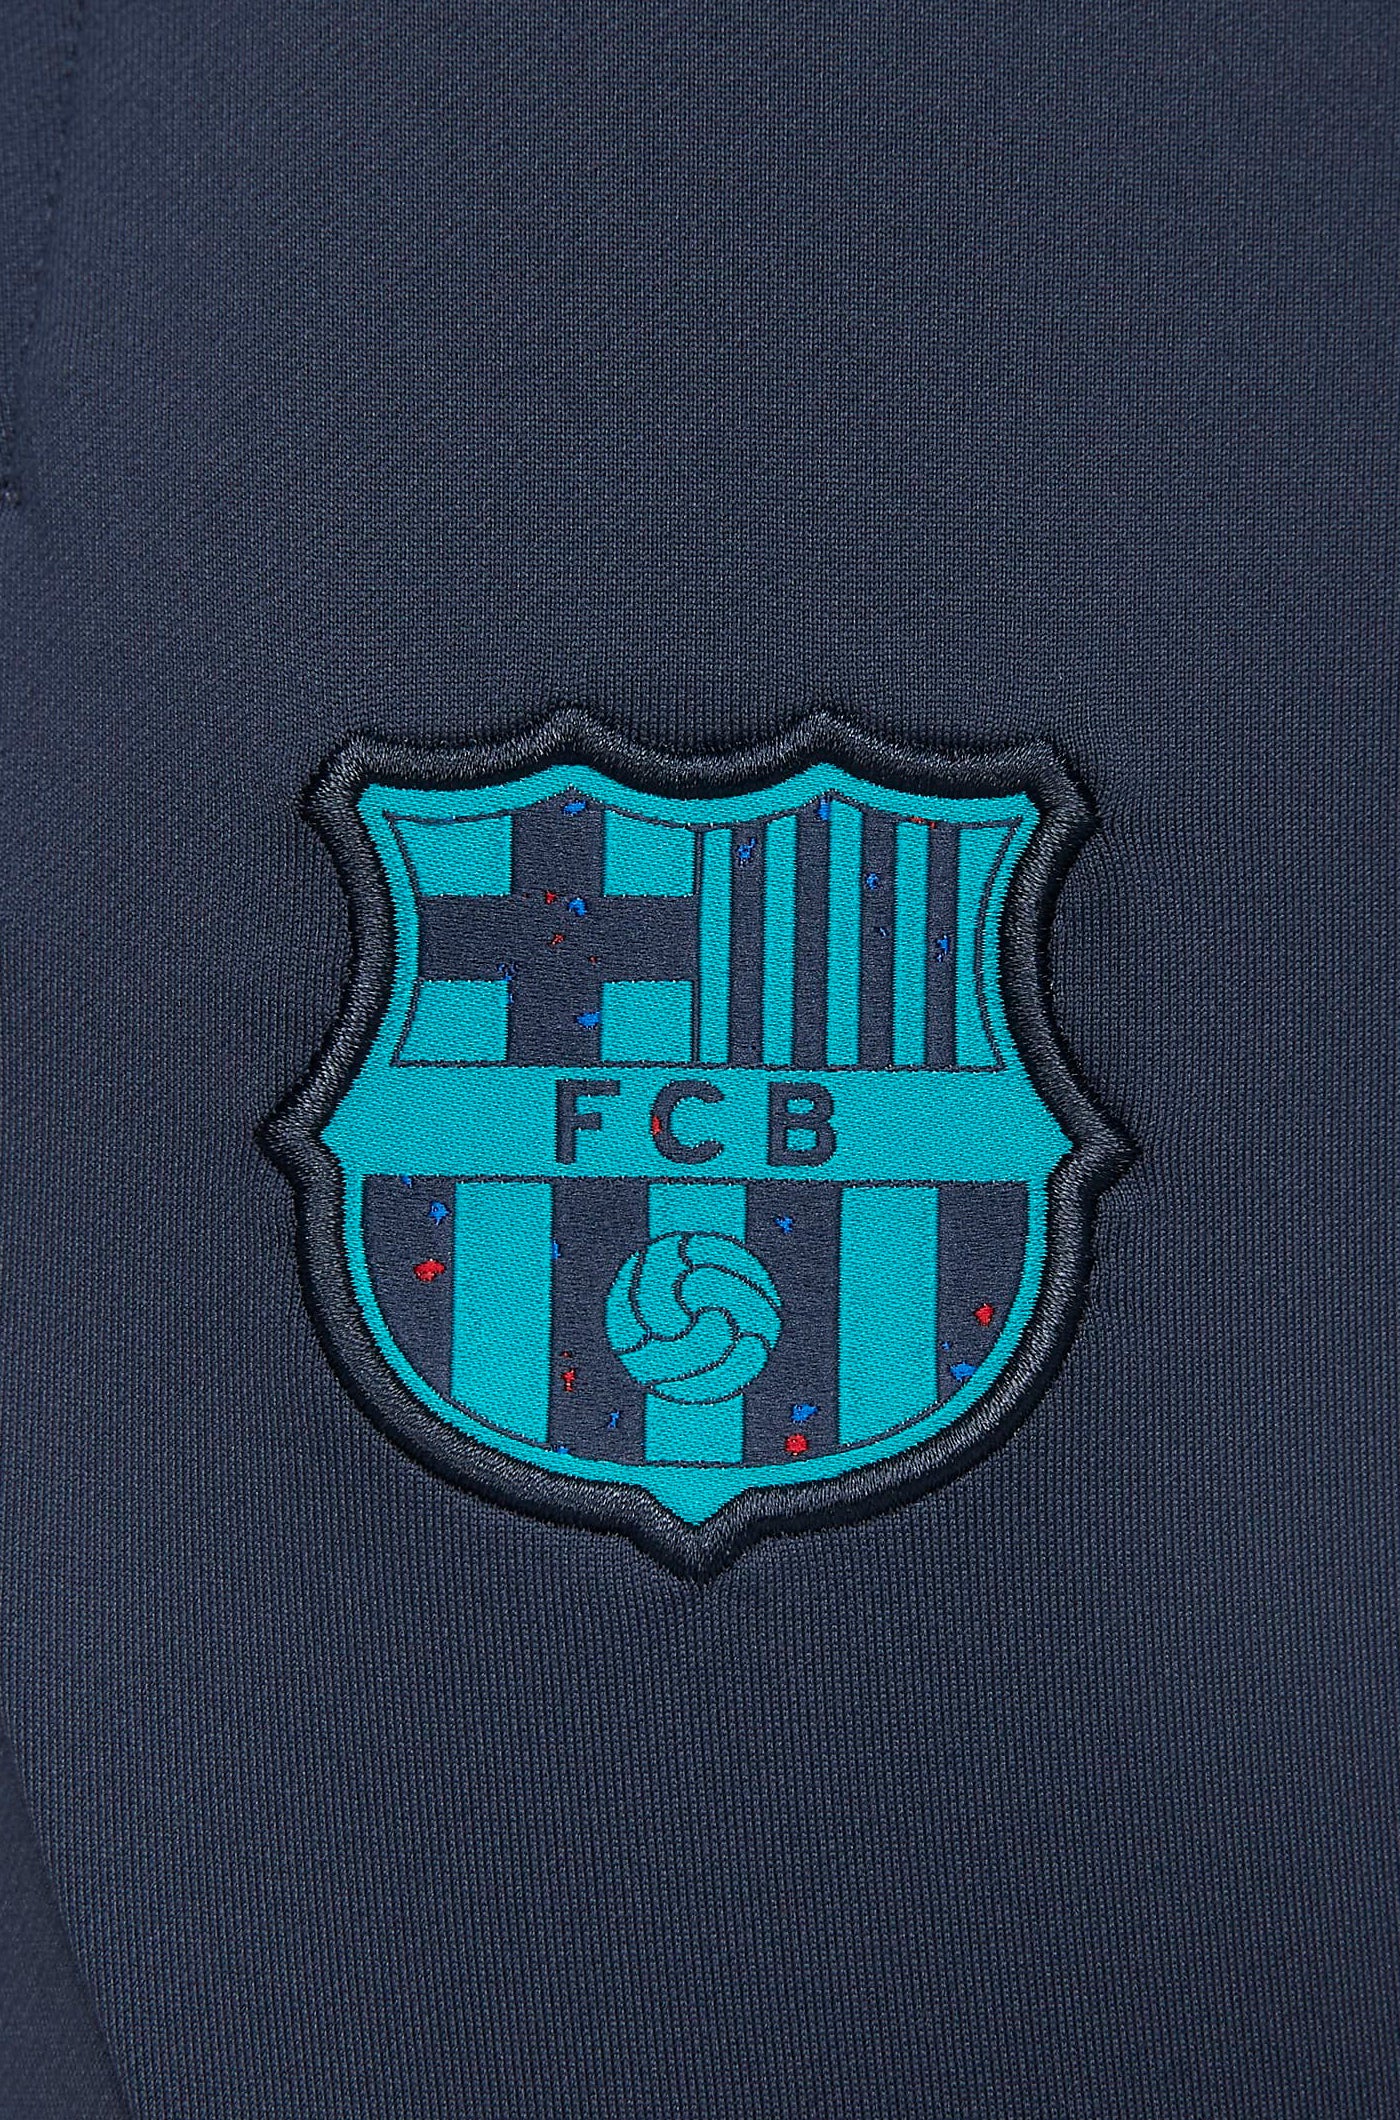 Pantalon Entraînement FC Barcelone 23/24